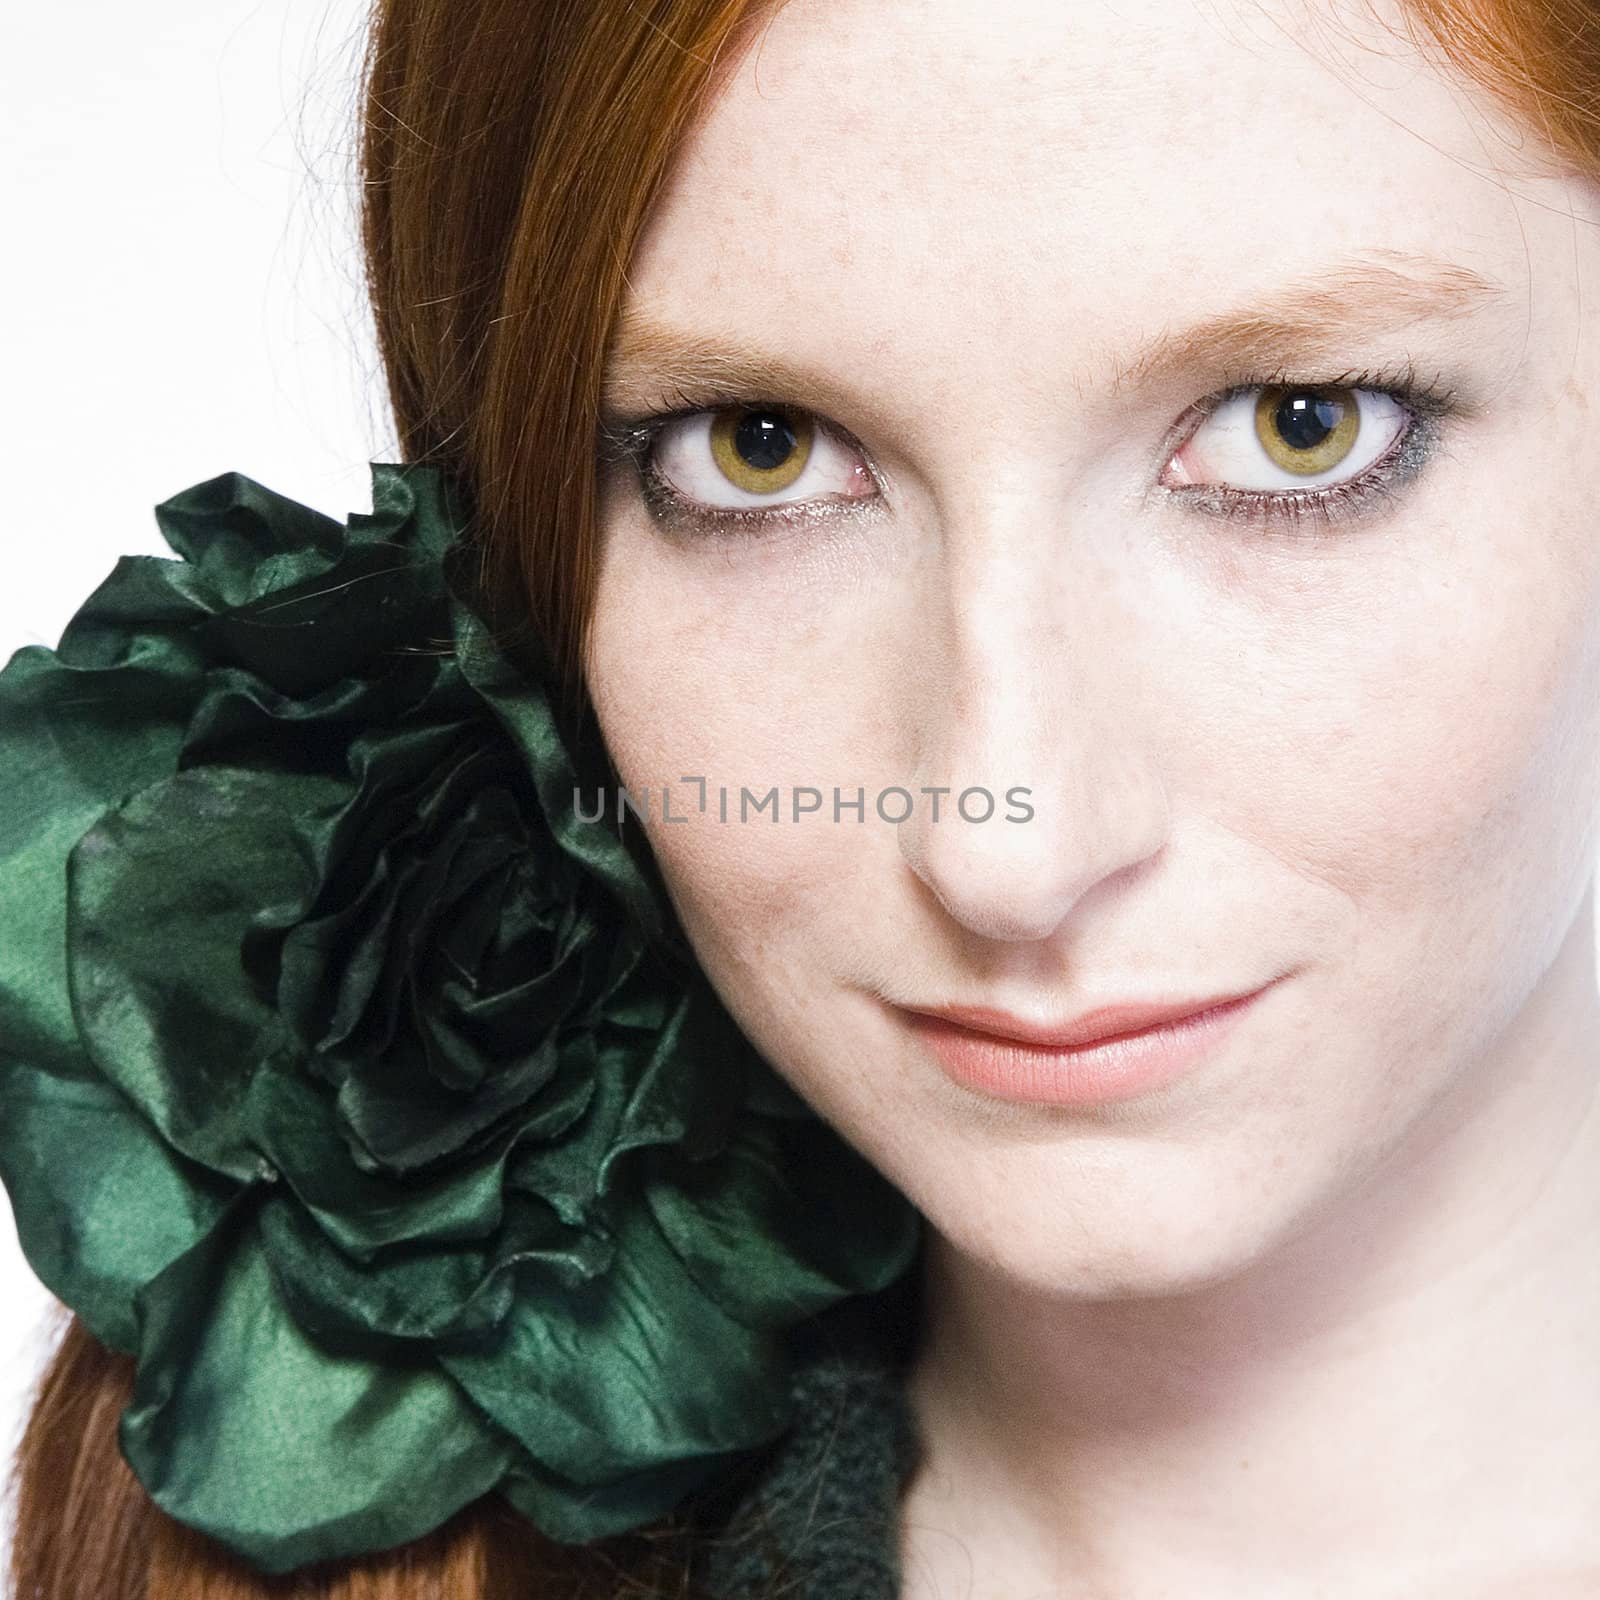 Studio portrait of a natural redhead